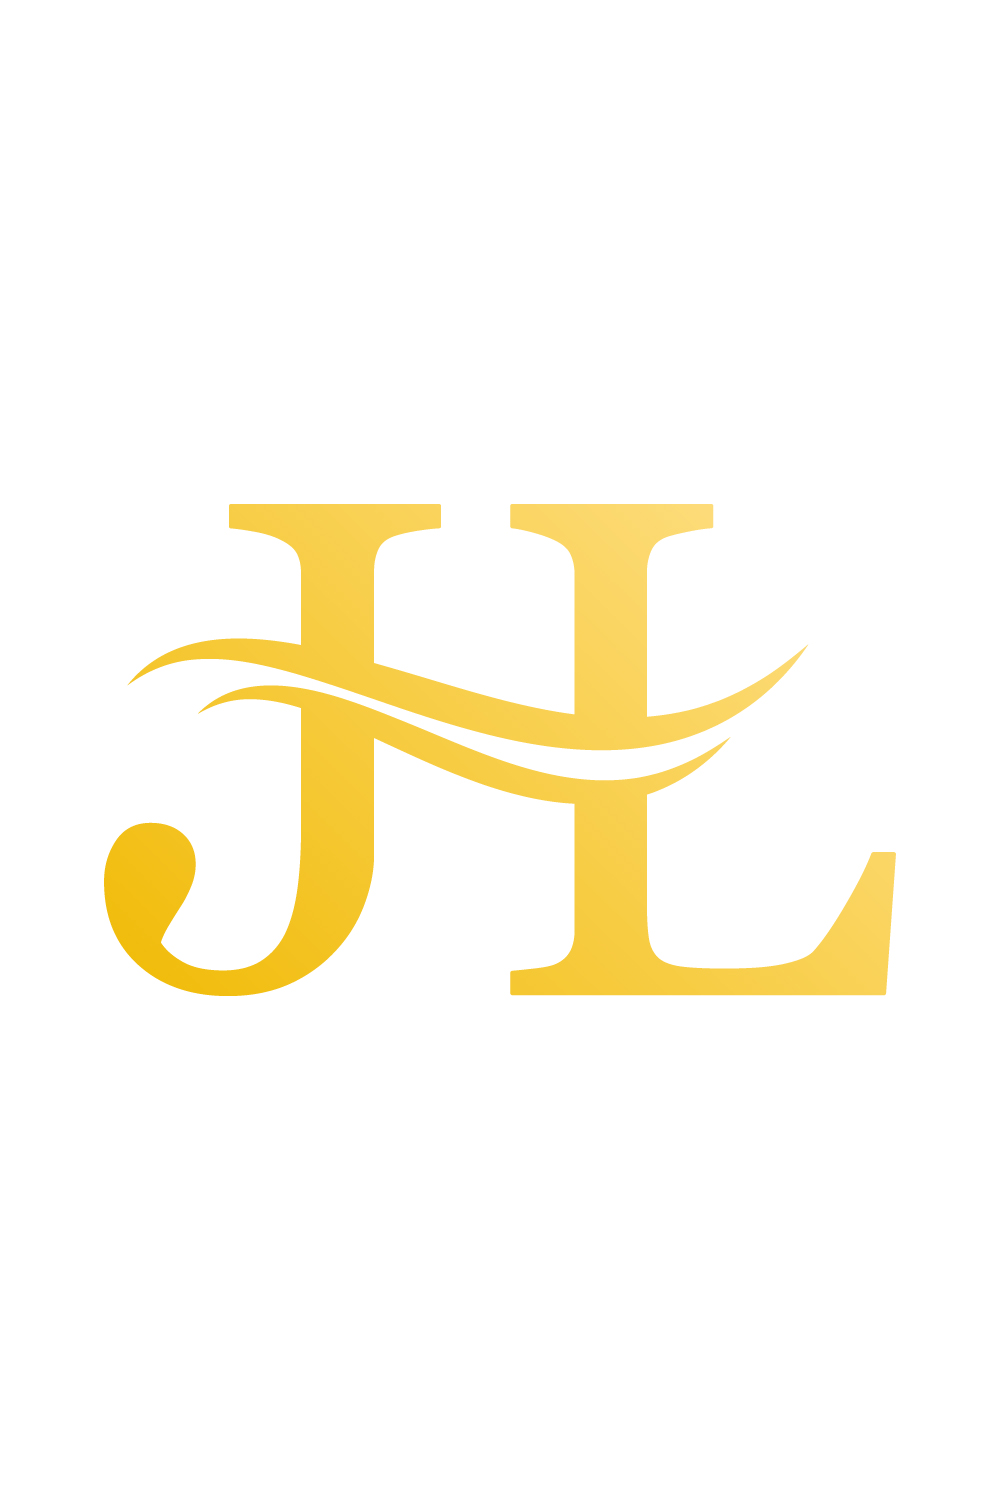 Luxury JL letters logo design JL logo design golden color best icon H logo vector images pinterest preview image.